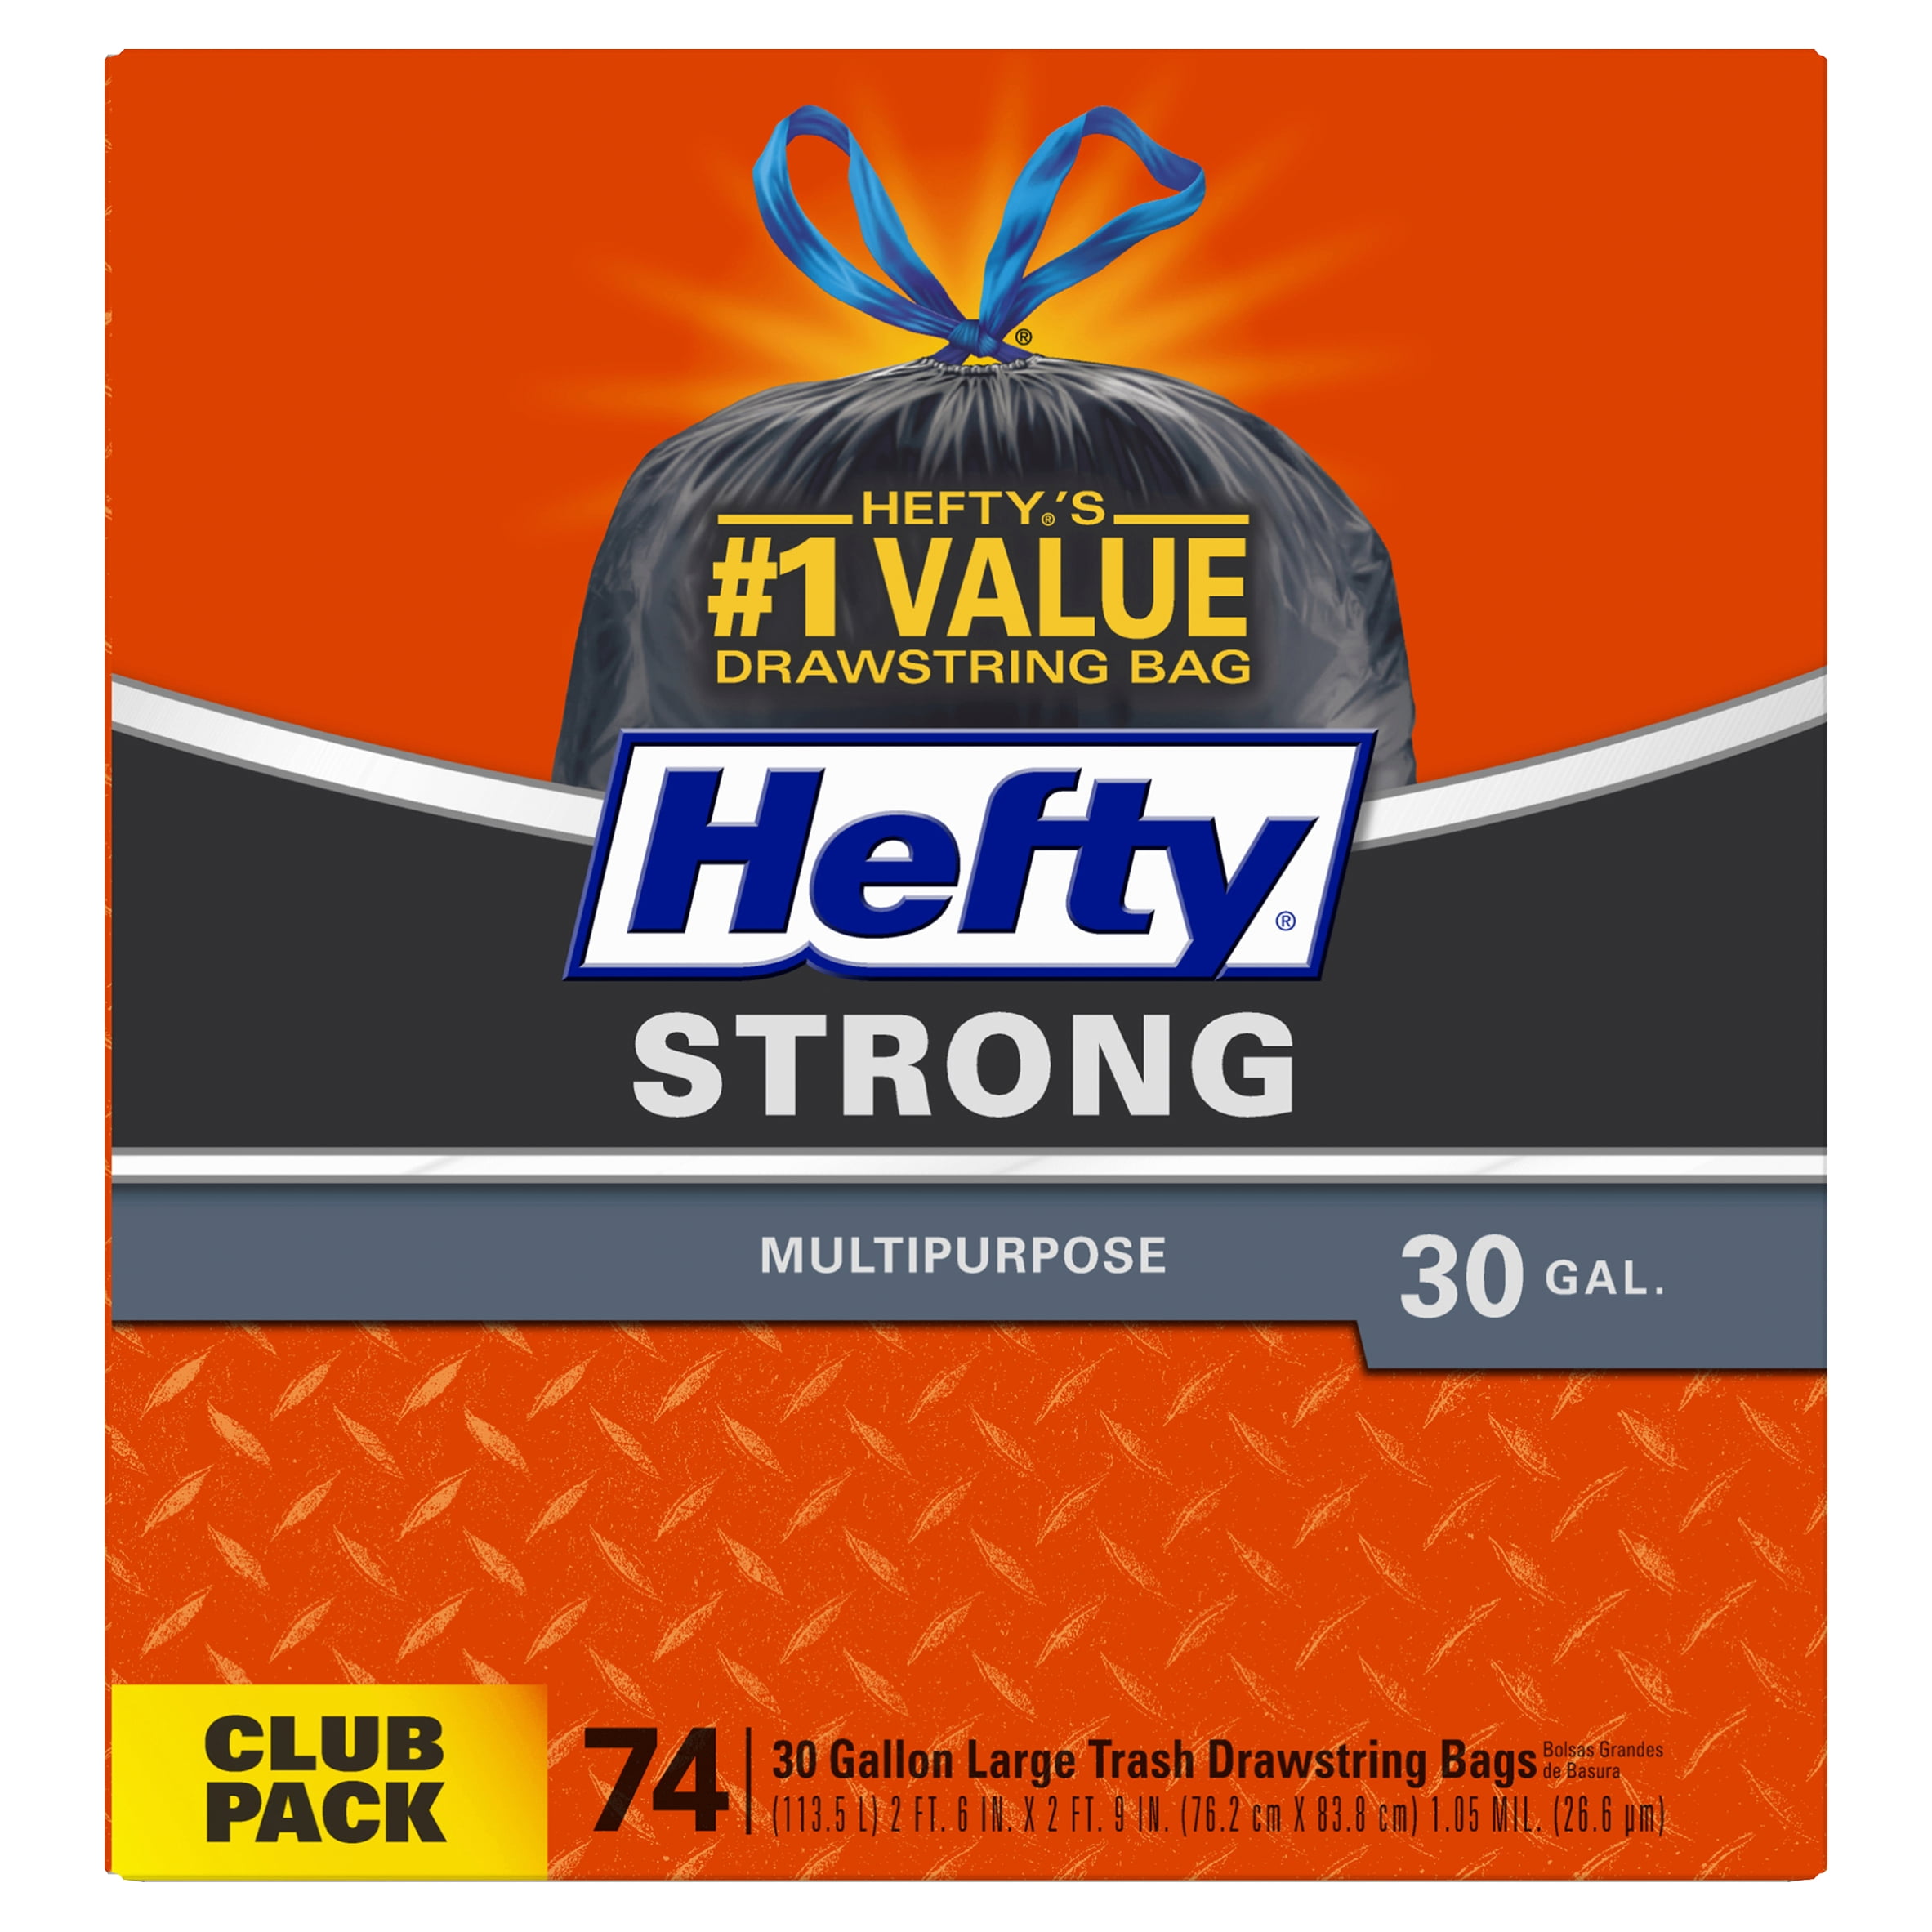 Hefty Steel Sak 39 Gal. Heavy Duty Black Trash Bag (28-Count) – Hemlock  Hardware